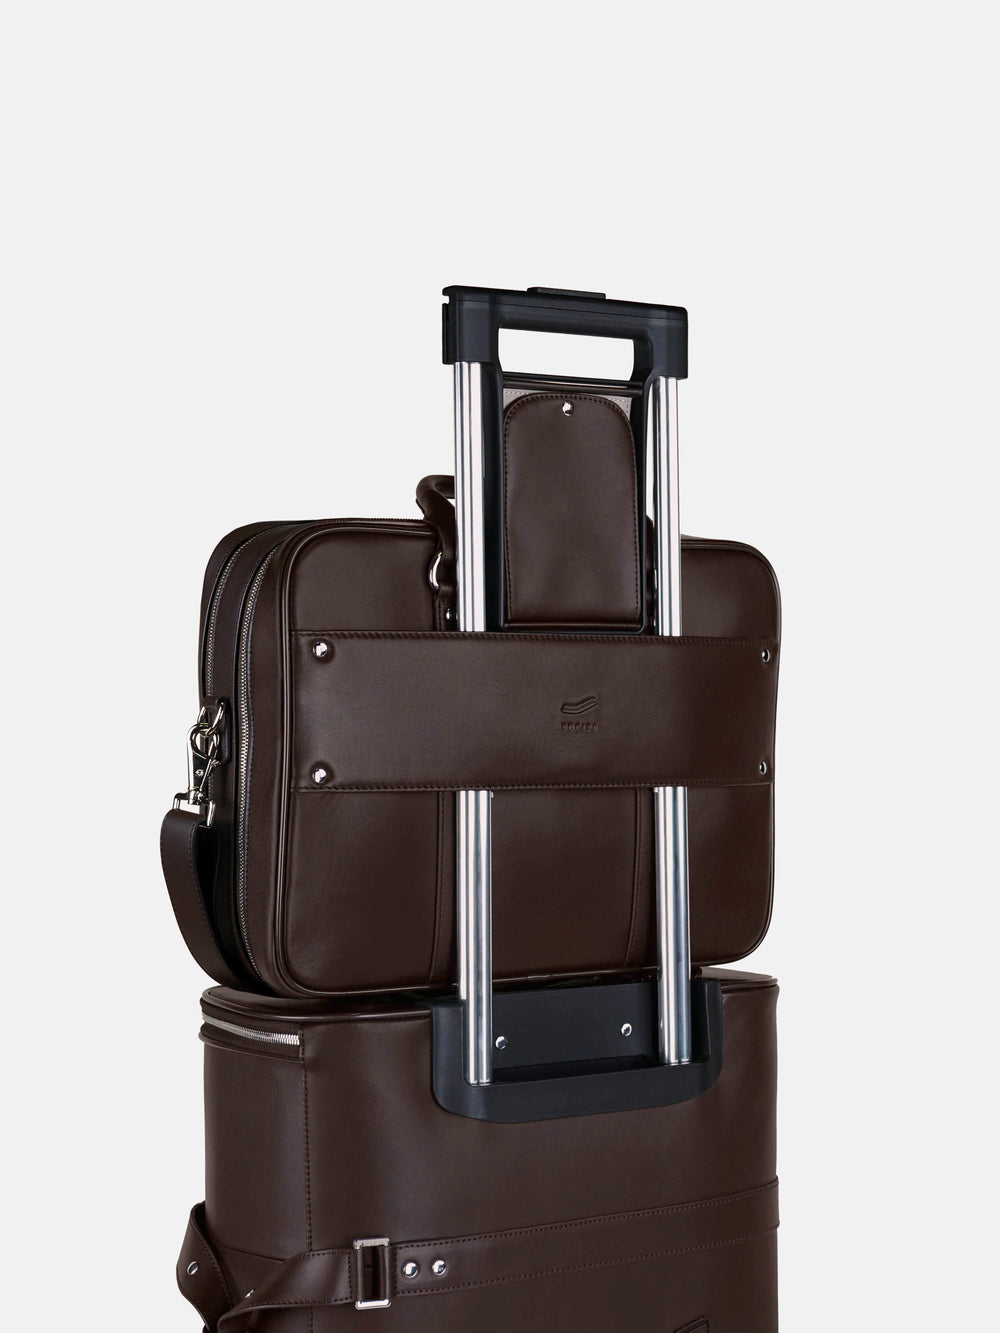 f26 on luggage brown leather braunes leder